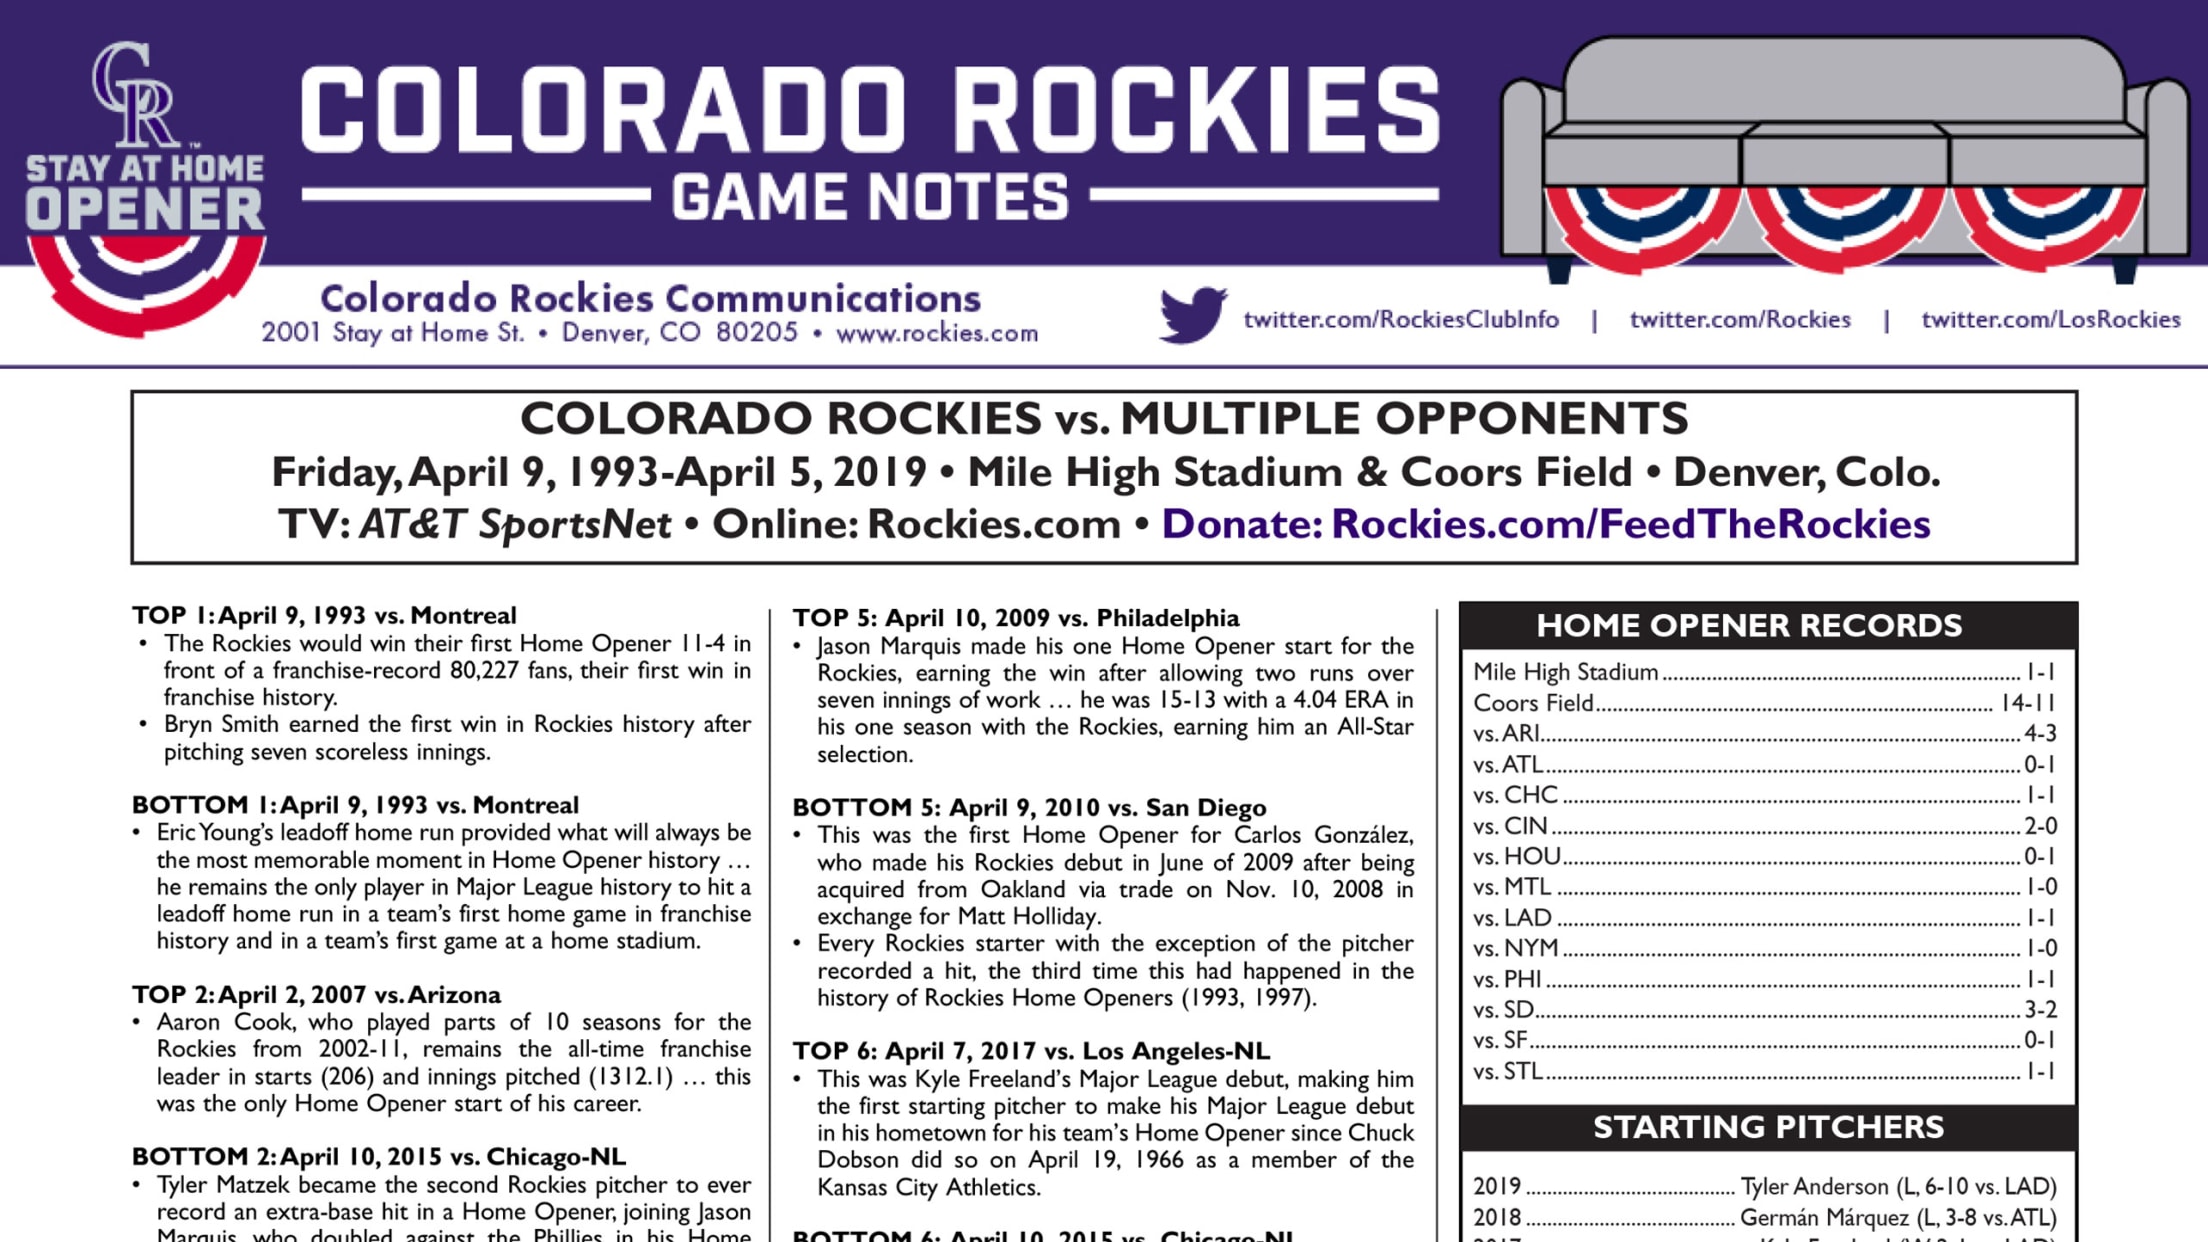 Colorado Rockies host San Diego Padres in home opener at Coors Field